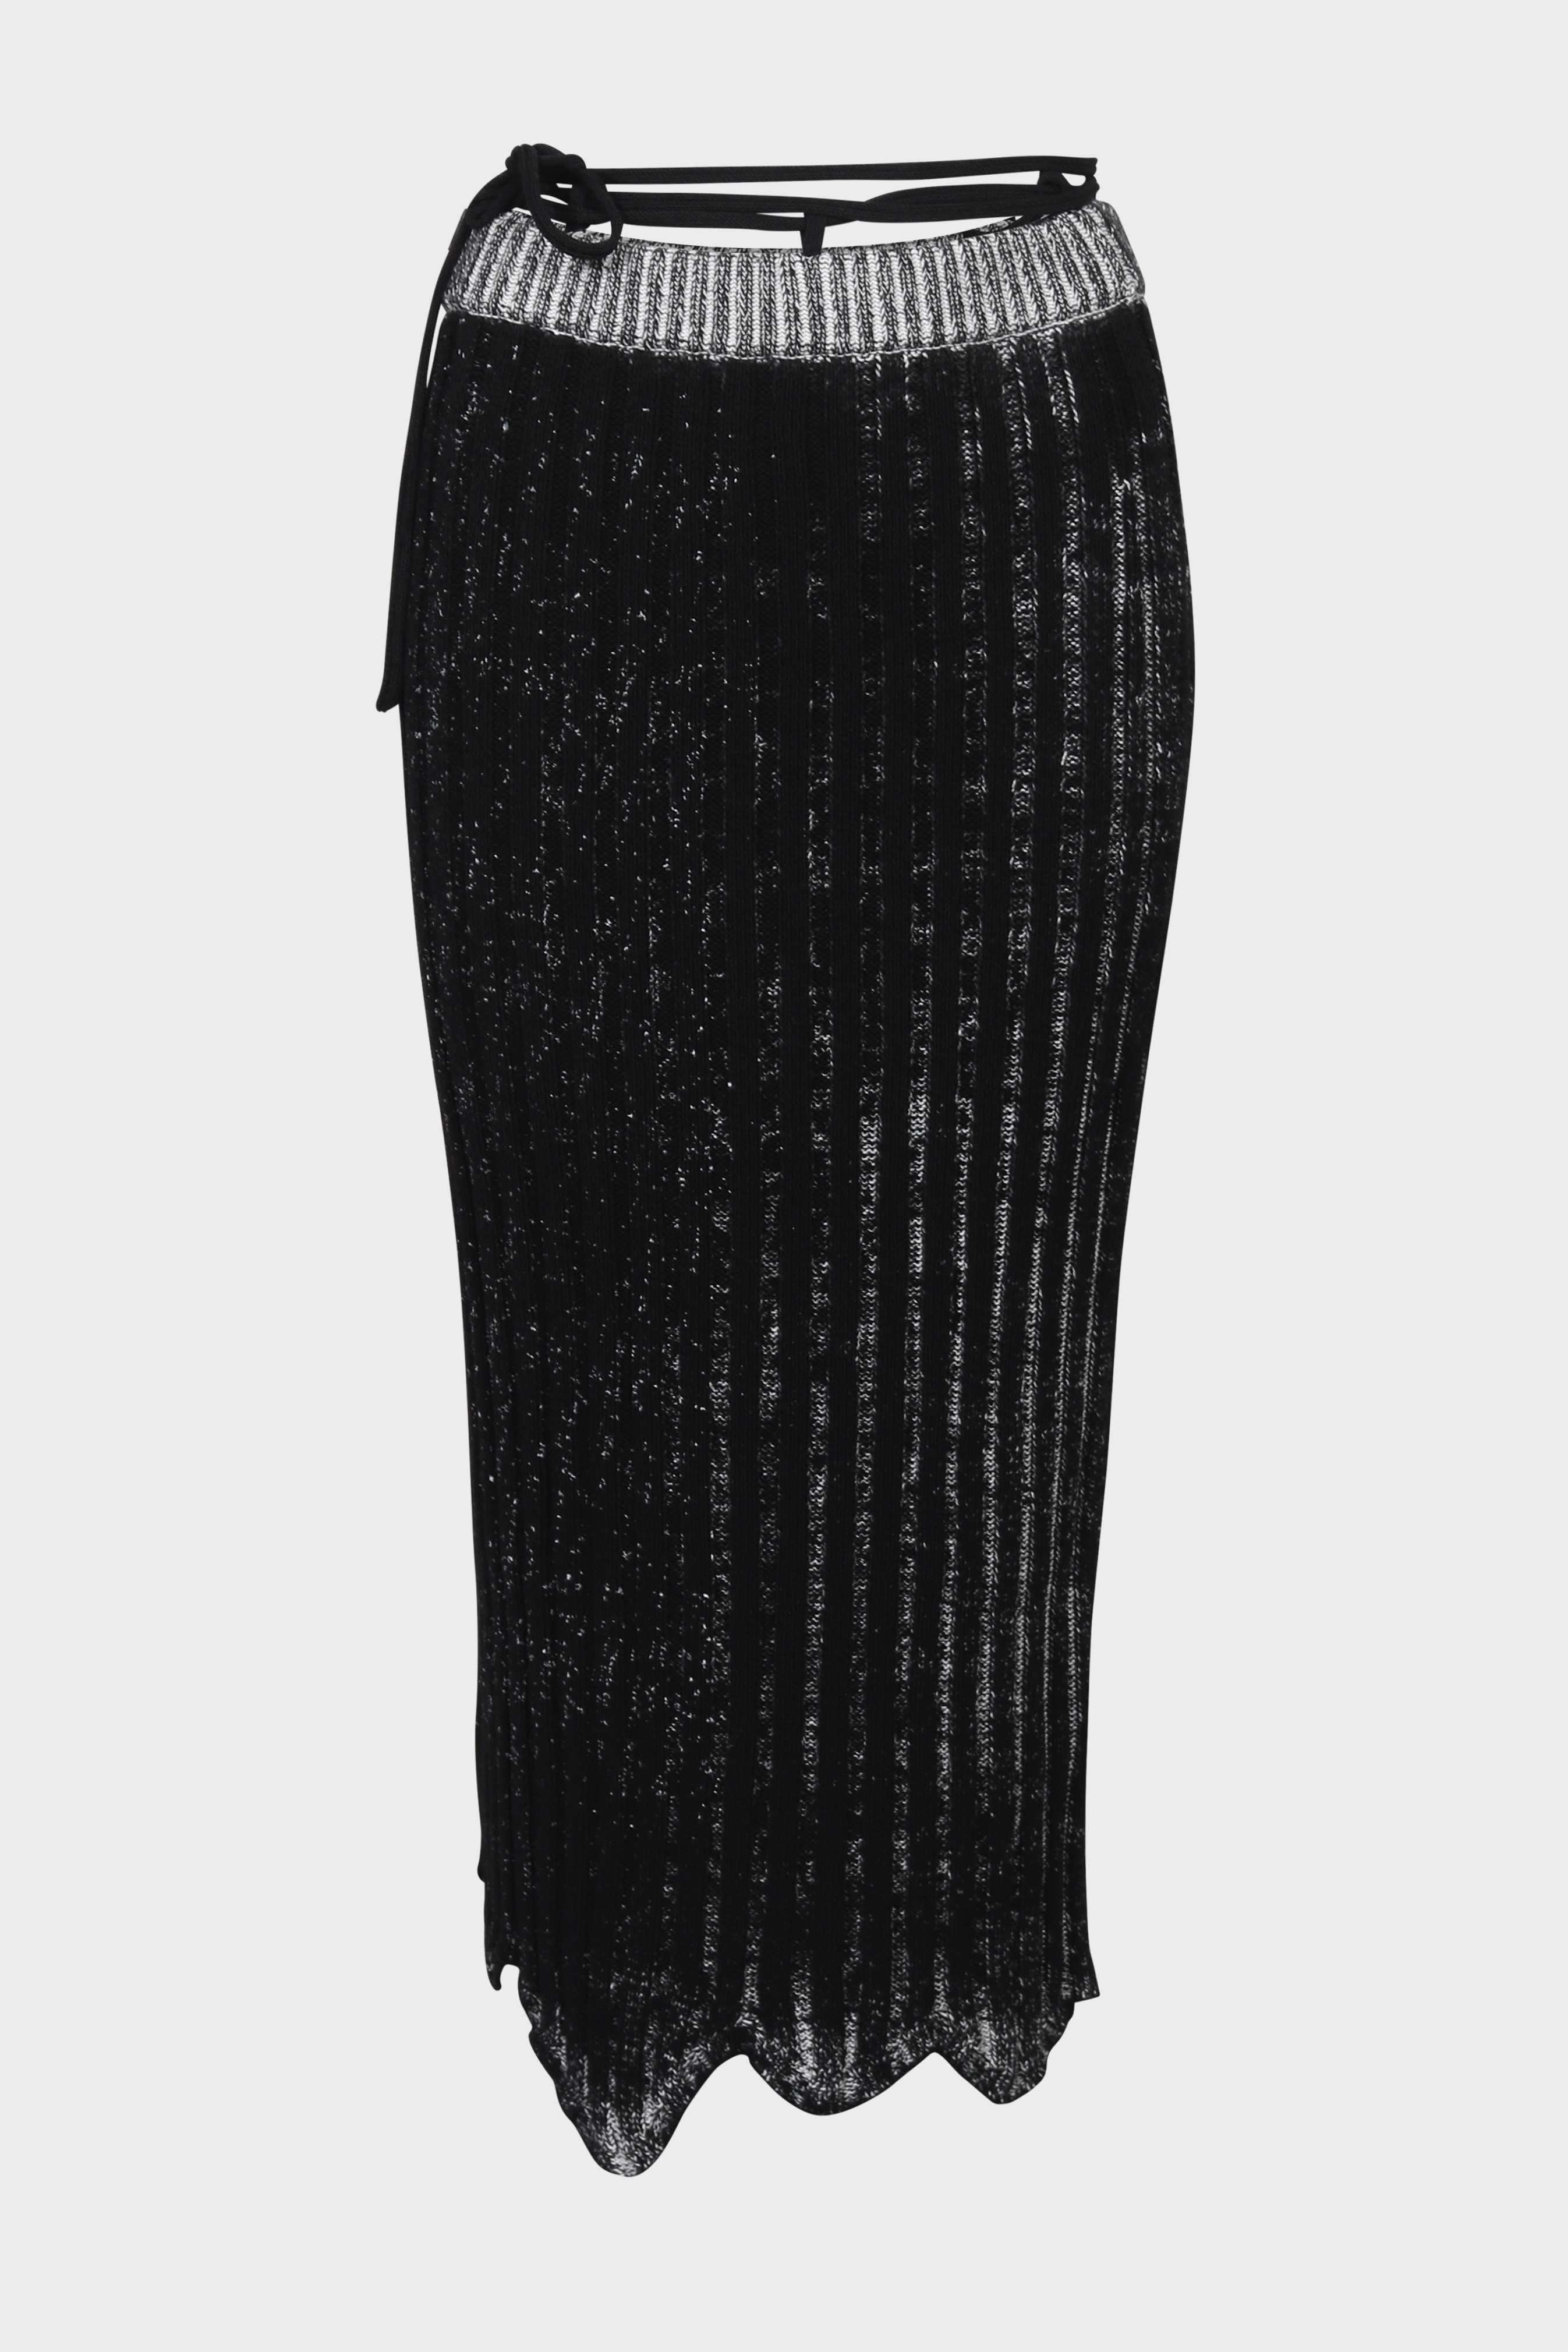 ACNE STUDIOS Knit Skirt in Black/White S